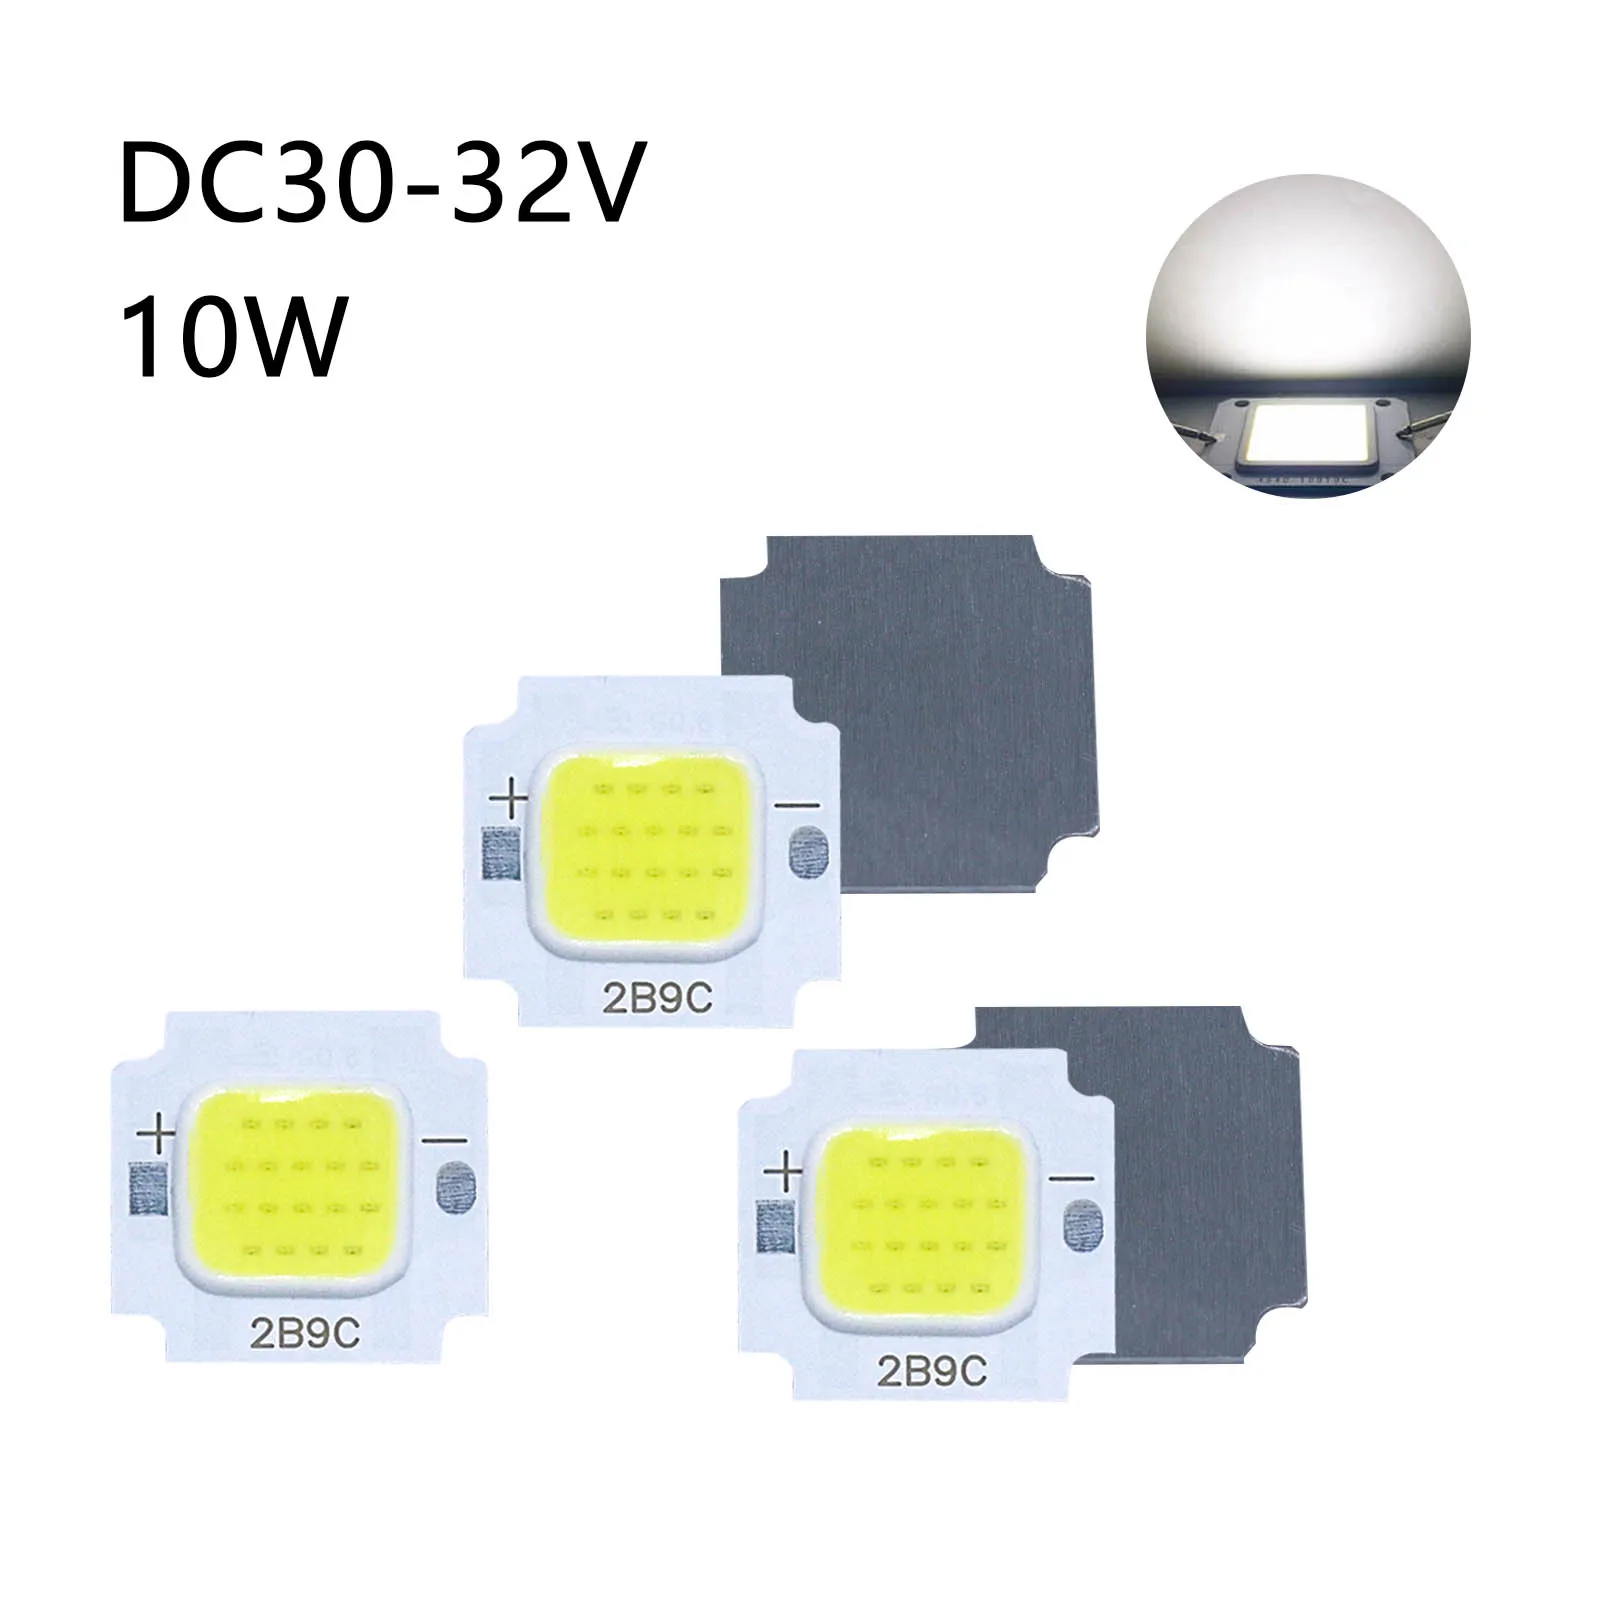 

5 pcs High Power 300mA LED COB Chips 10W DC 30-32V Light Beads SMD DIY For LED Bulb Cold White Floodlight Spotlight Portable